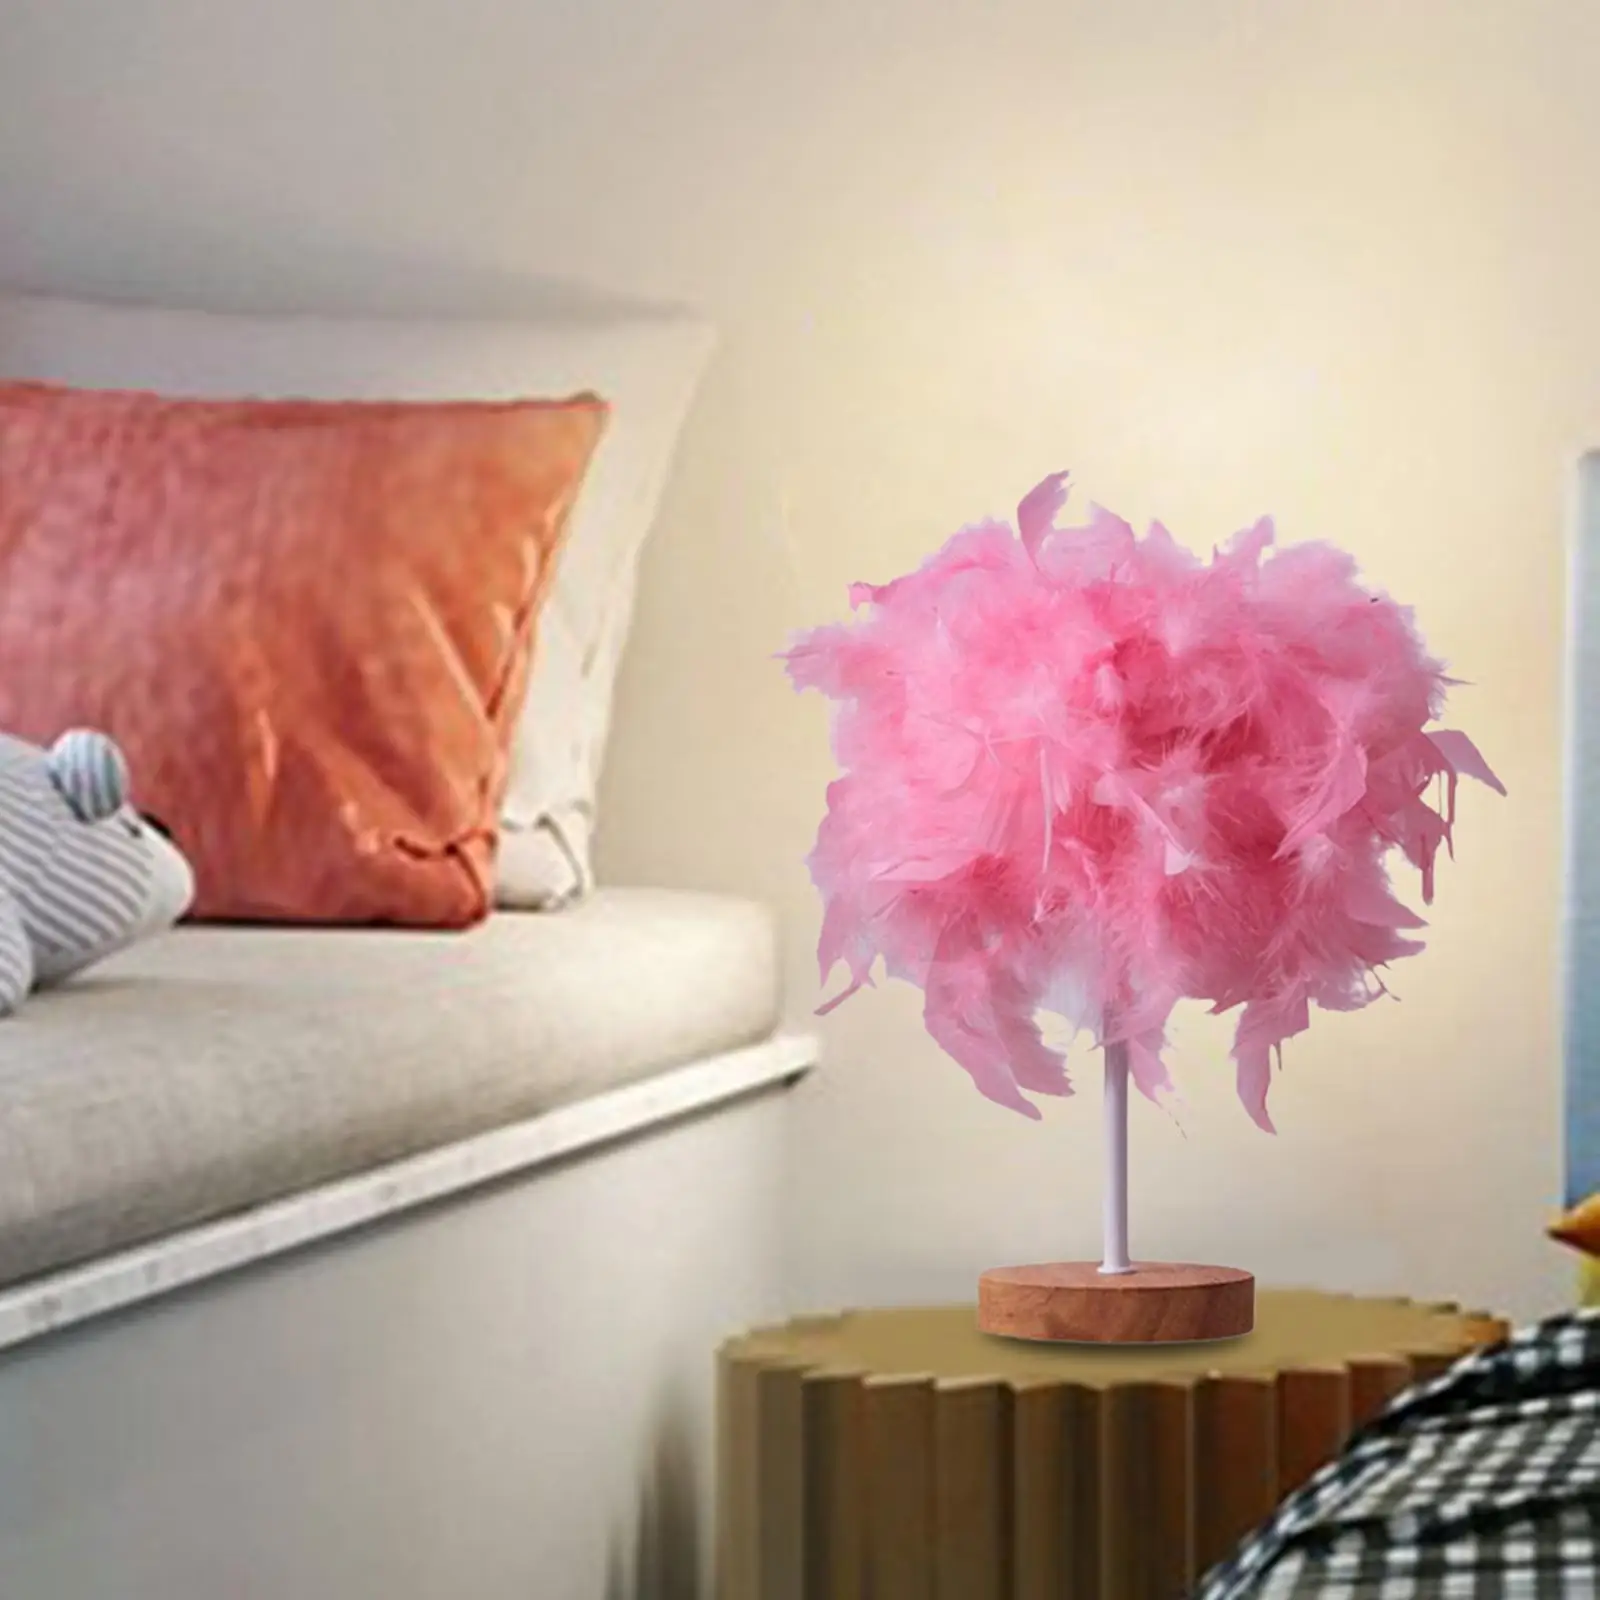 Elegant LED Table Lamp Desk Light Feather Lampshade Romantic Lighting Night Lamp for Living Room Bedroom Dorm Decoration